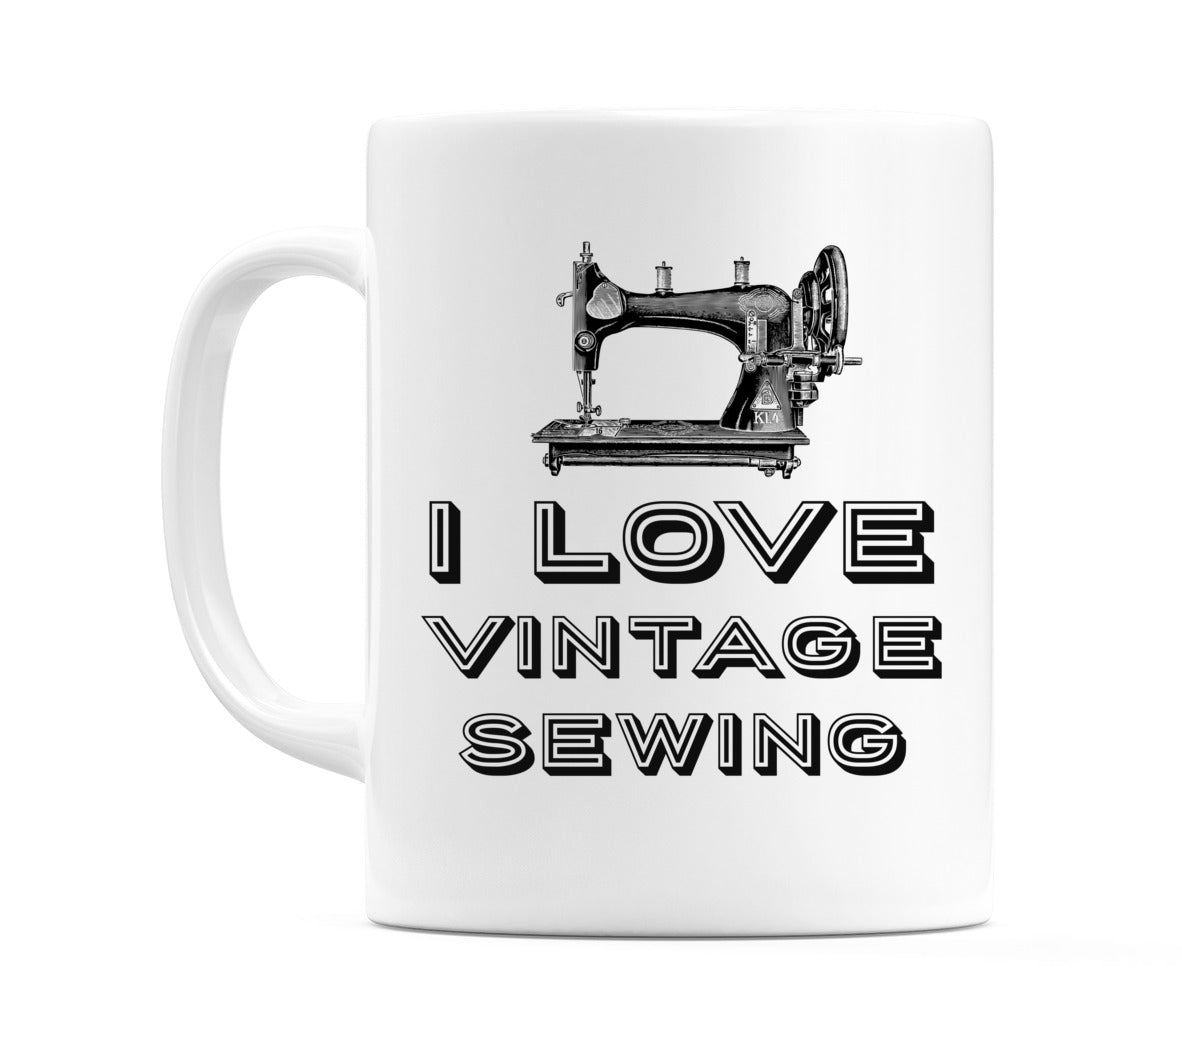 I Love Vintage Sewing Mug